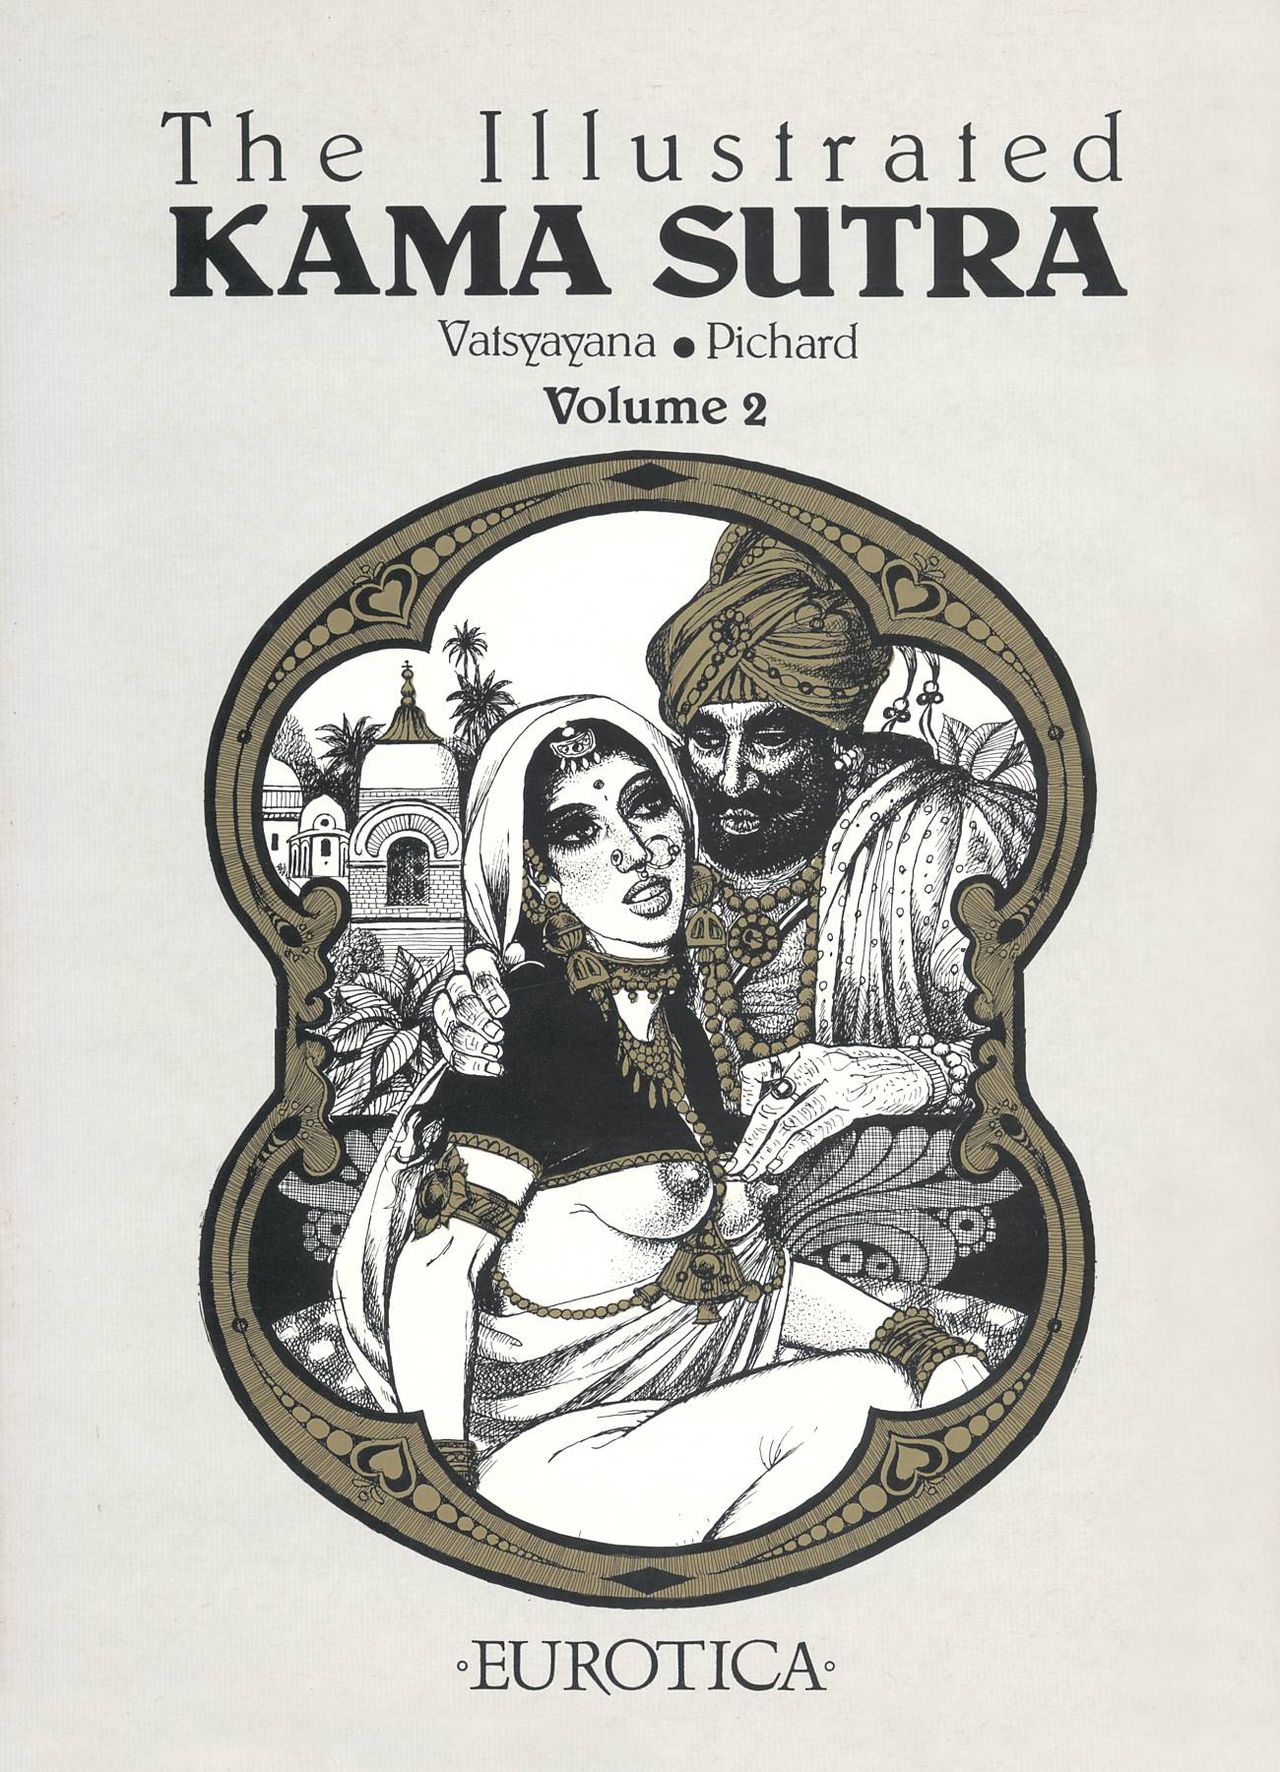 [Georges Pichard] Kama Sutra - Volume #2 